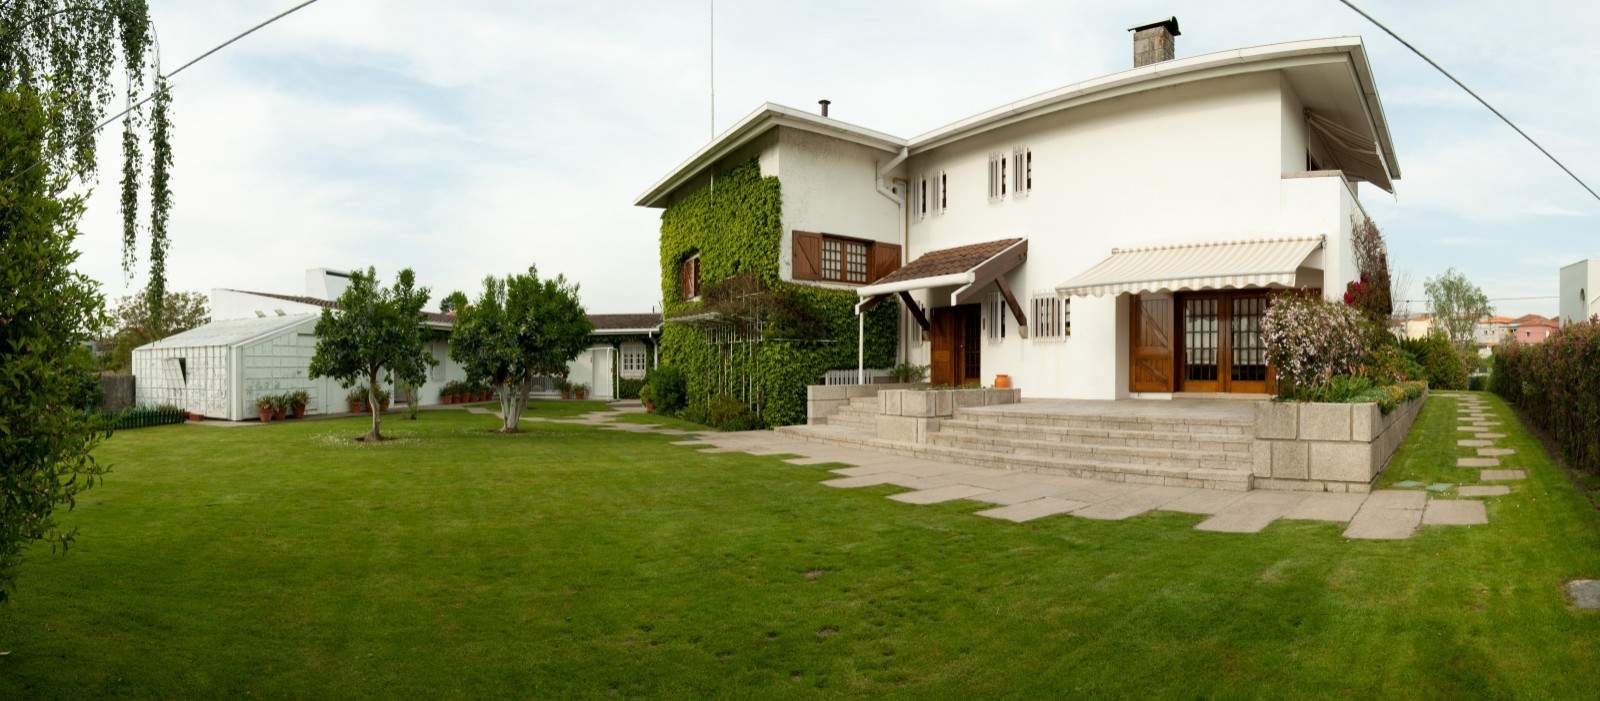 Villa de 4 faces à vendre avec jardin, Ermesinde, Porto, Portugal _36223